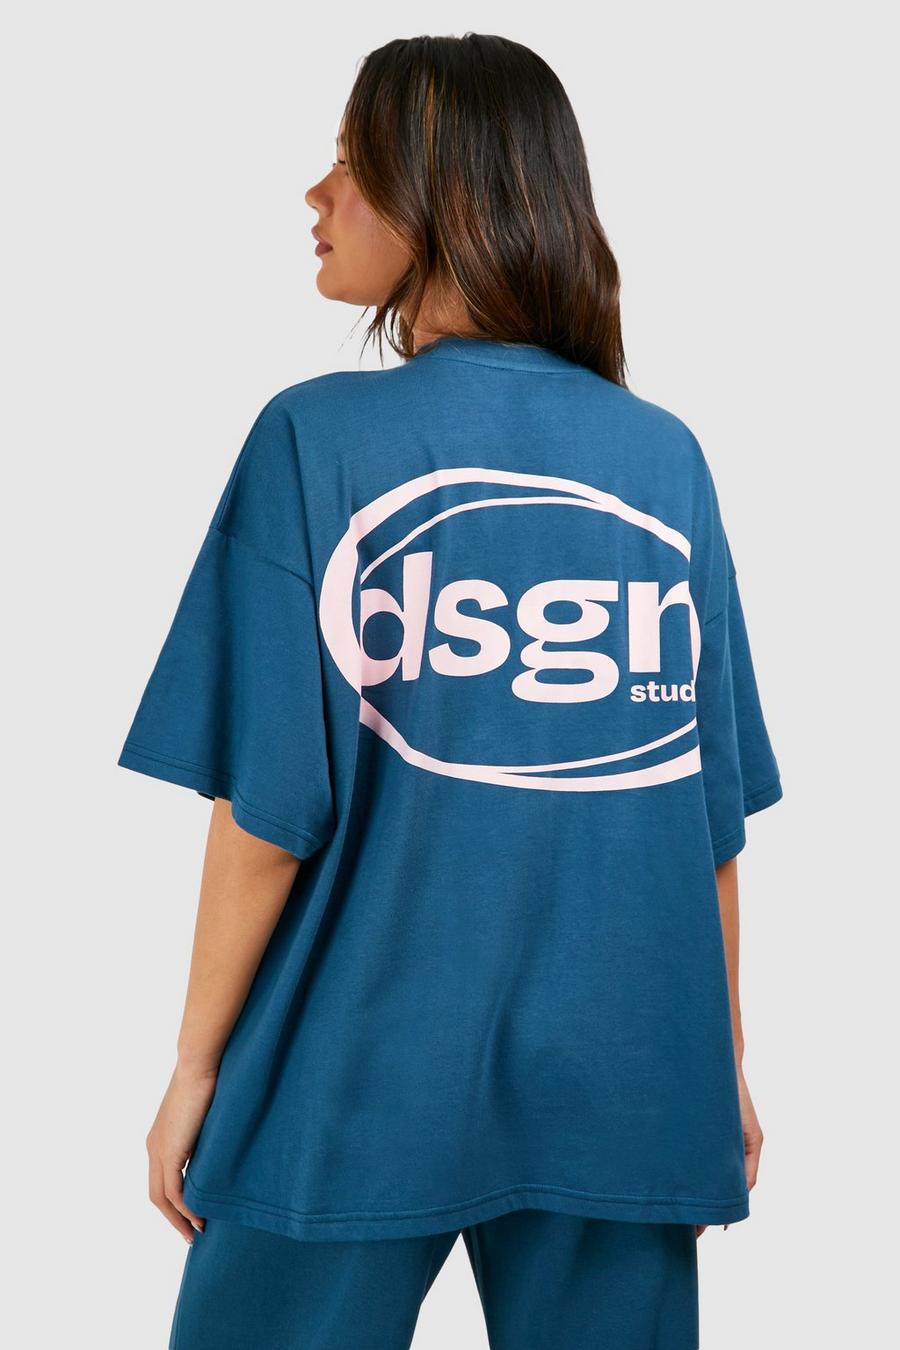 Teal Dsgn Studio Printed Oversized T-shirt 